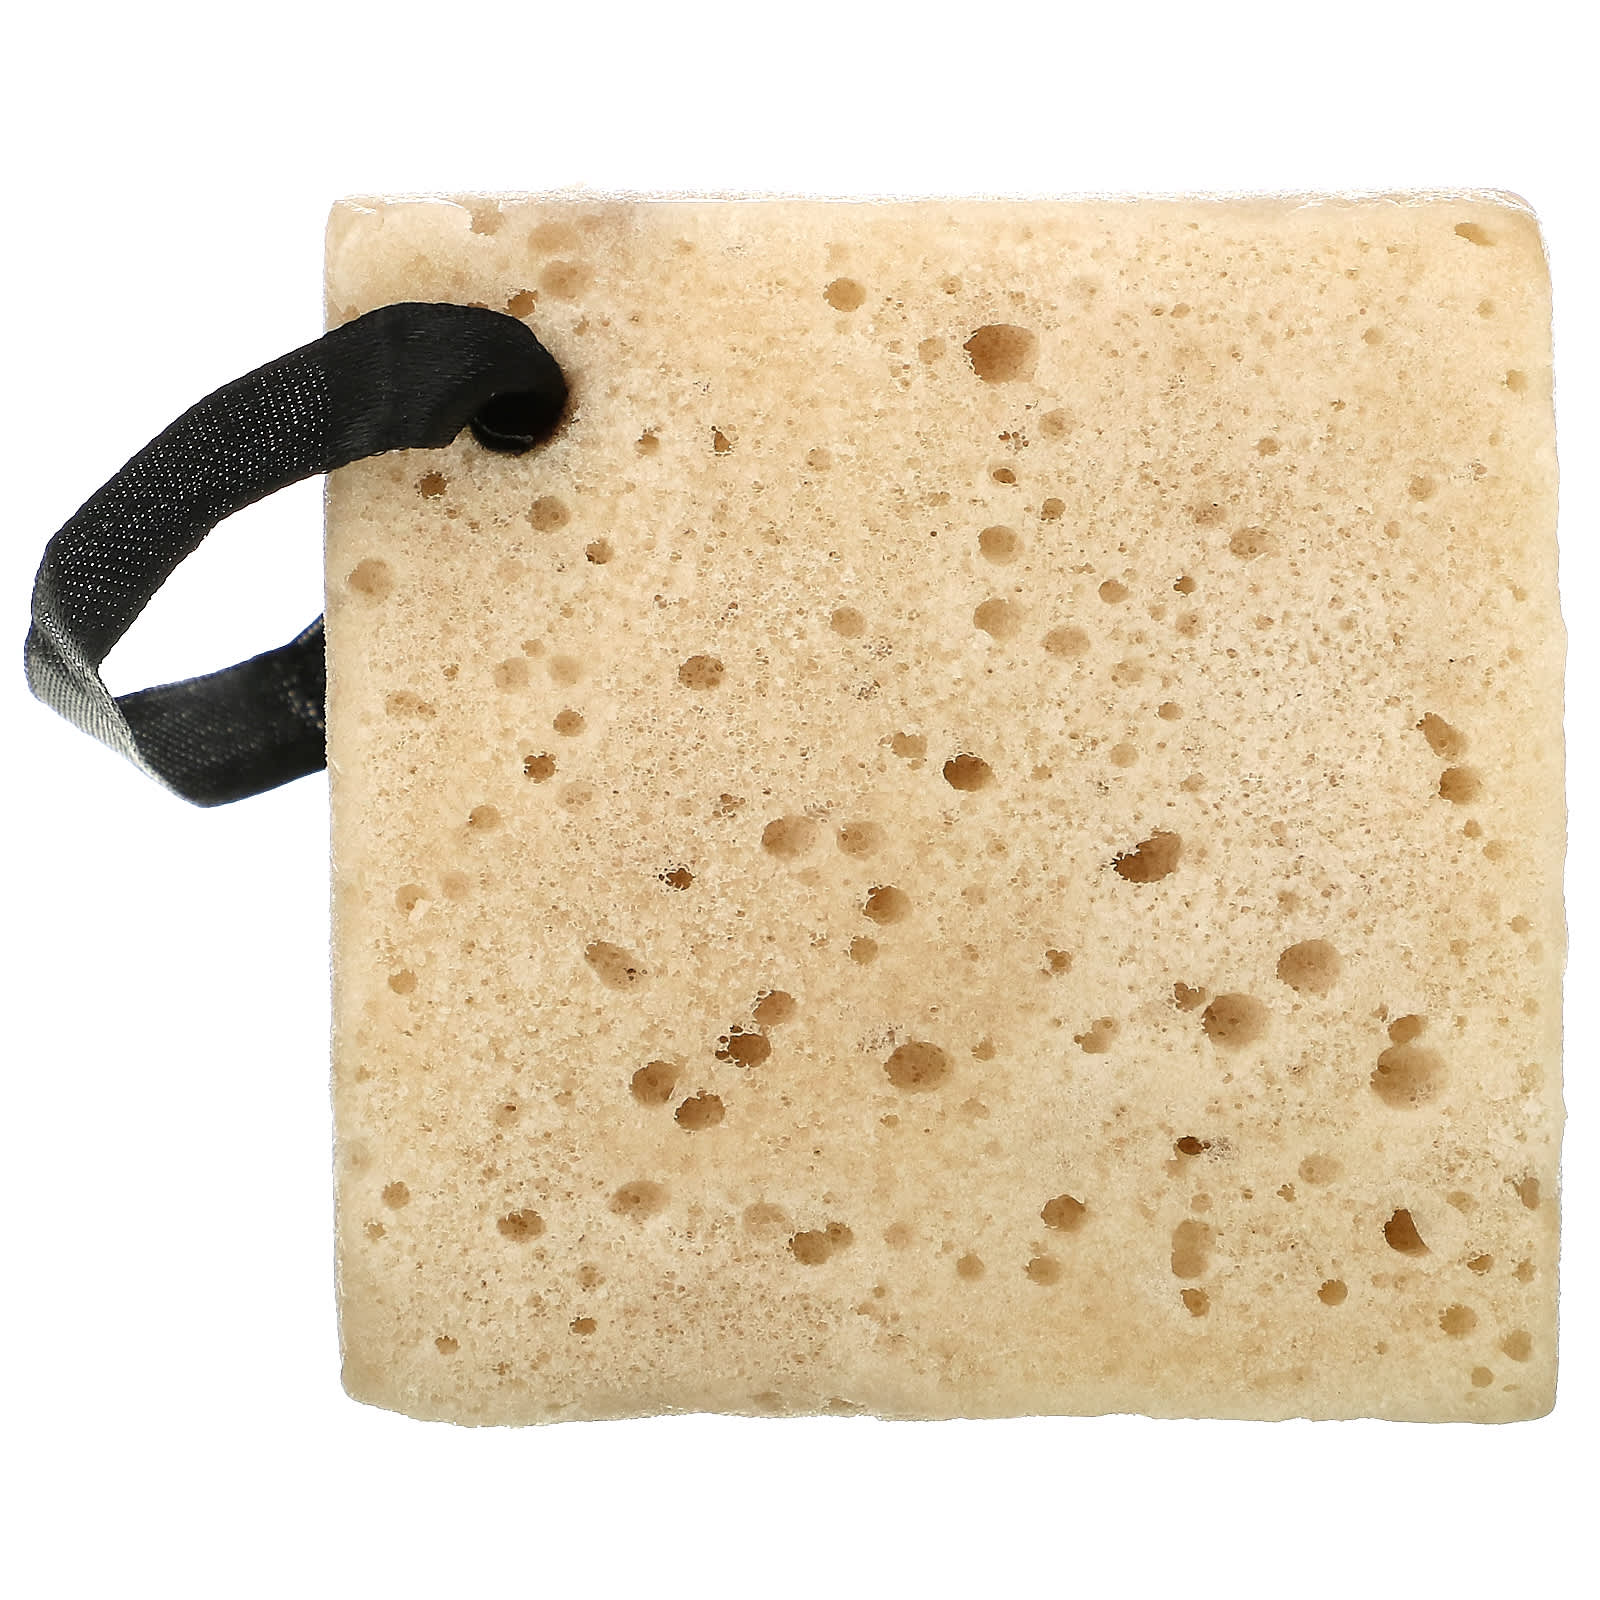 Freeman Beauty, Exfoliating Soap-Infused Sponge, Coffee, 1 Sponge (75 g)